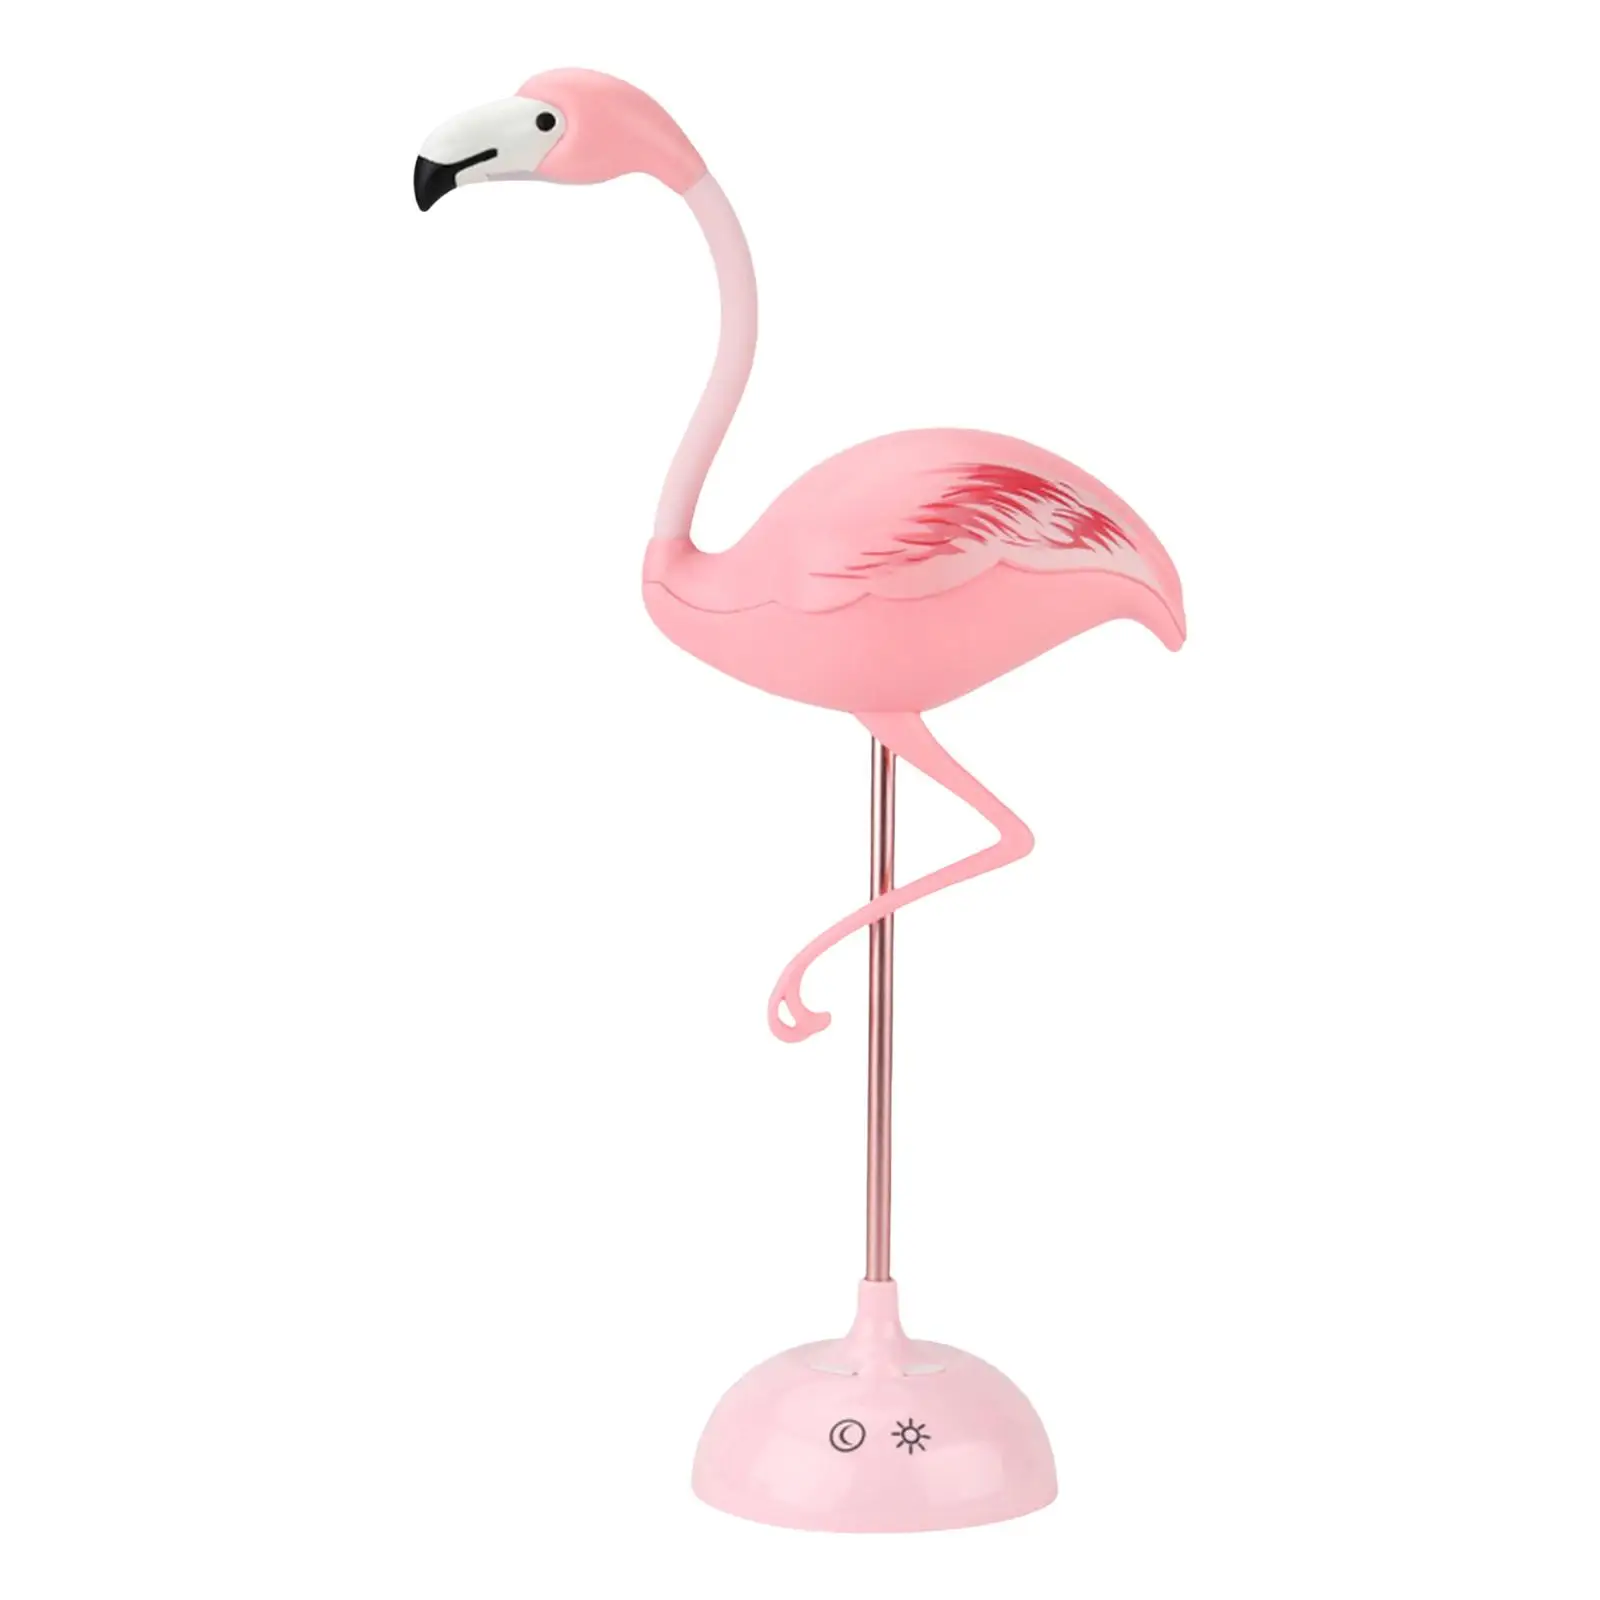 LED Flamingo Night Light Decorative Bedside Table Lamp for Dorm Decoration